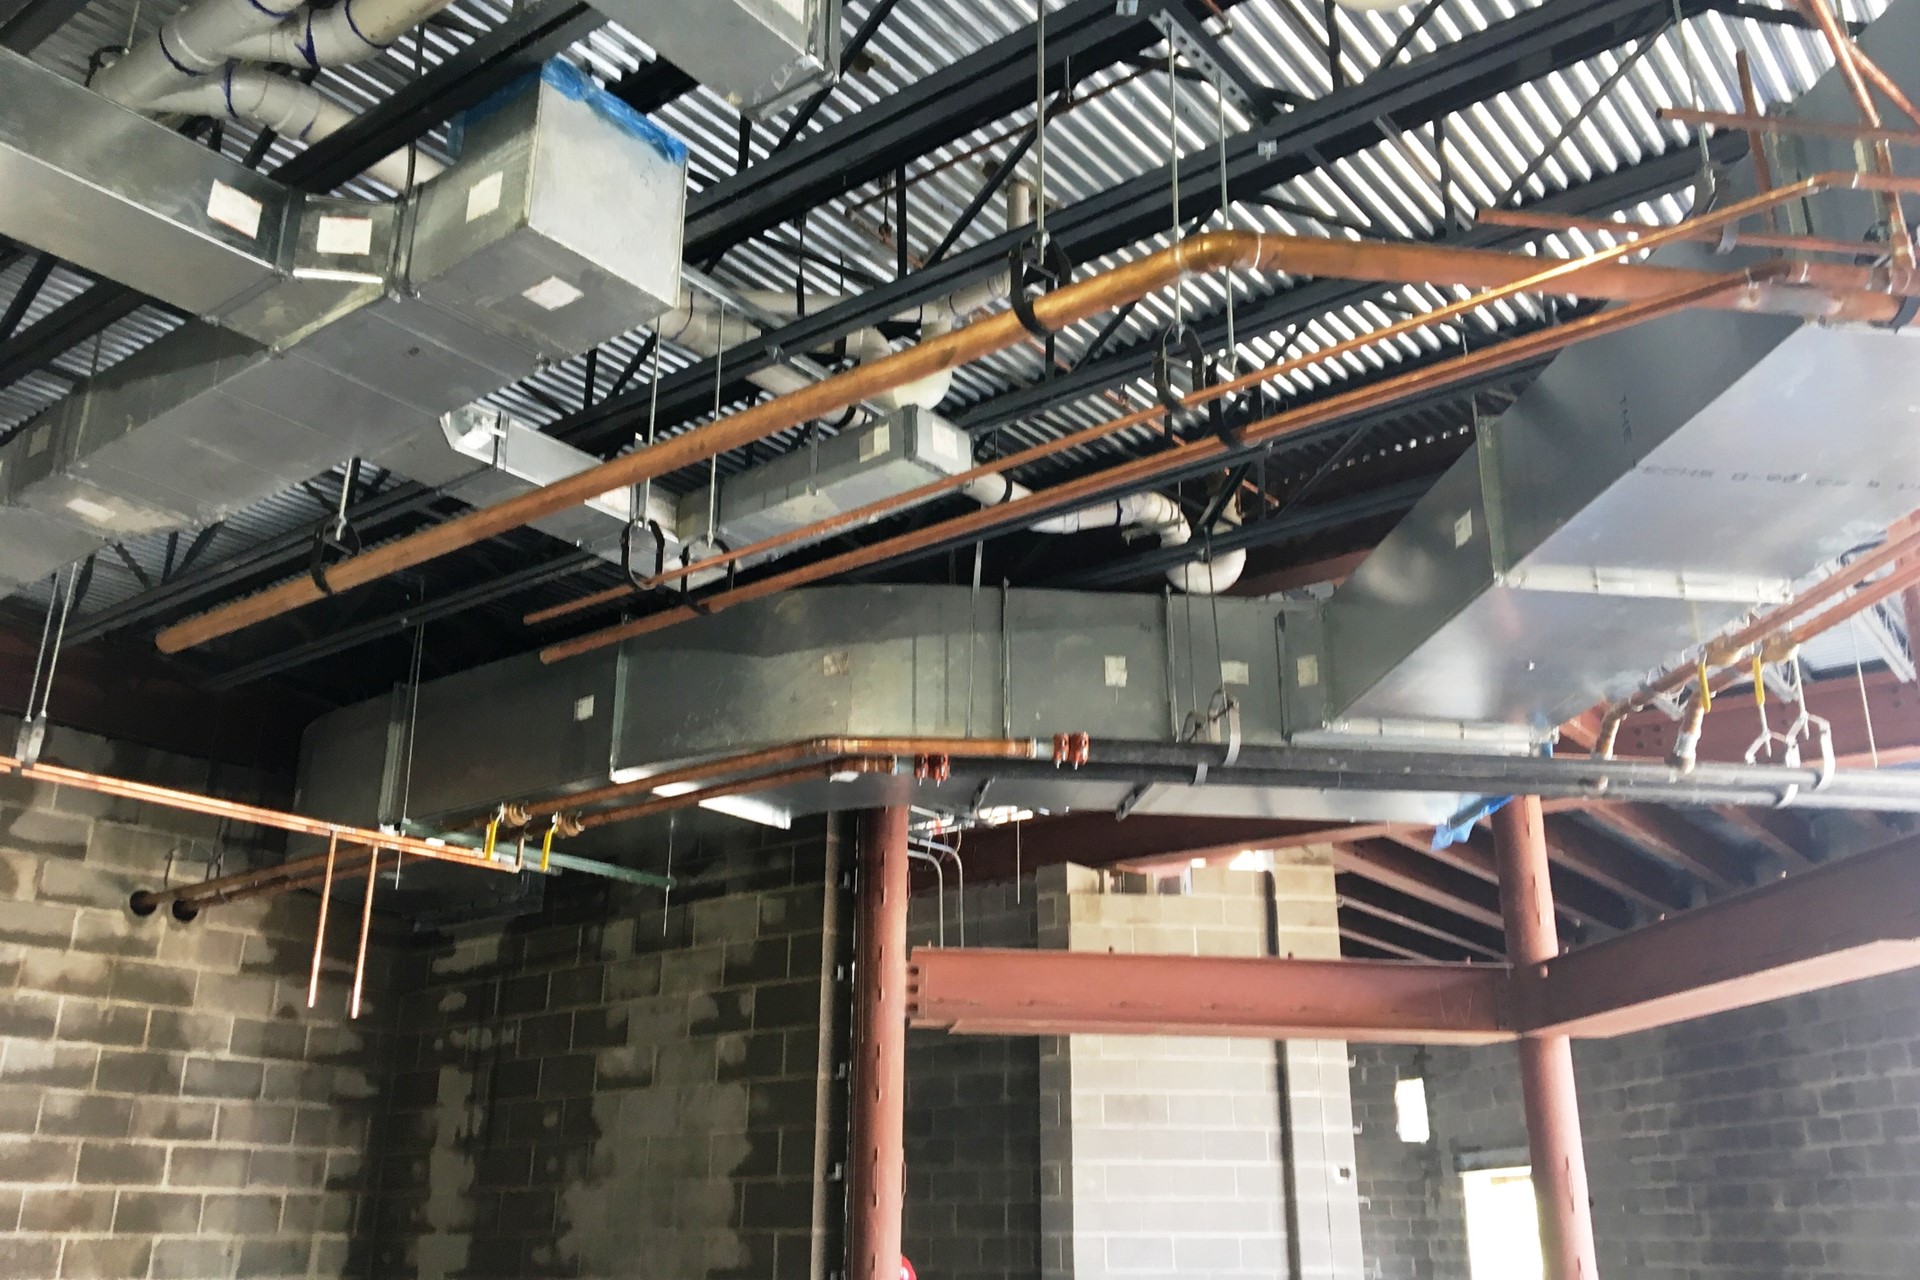 New school construction site: HVAC system installation